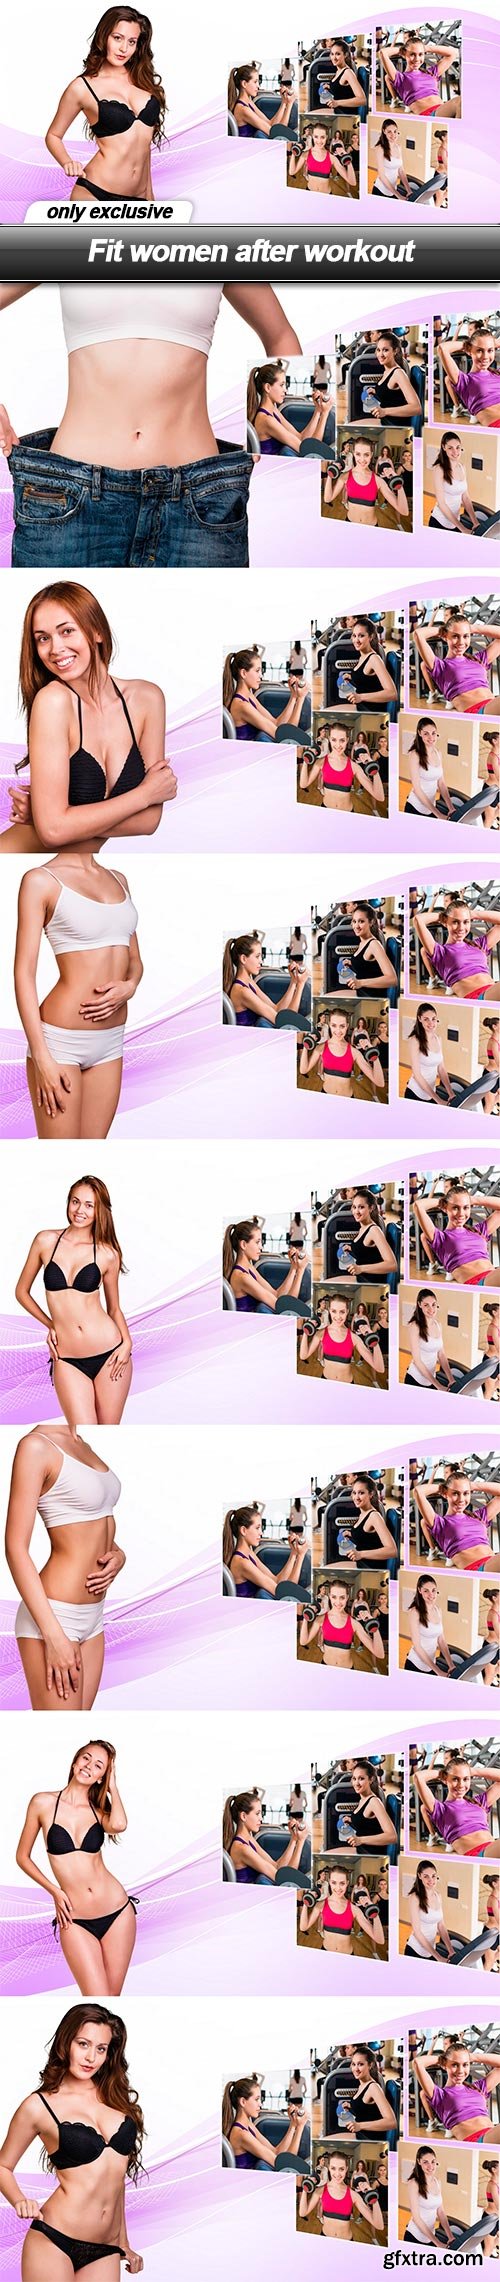 Fit women after workout - 7 UHQ JPEG